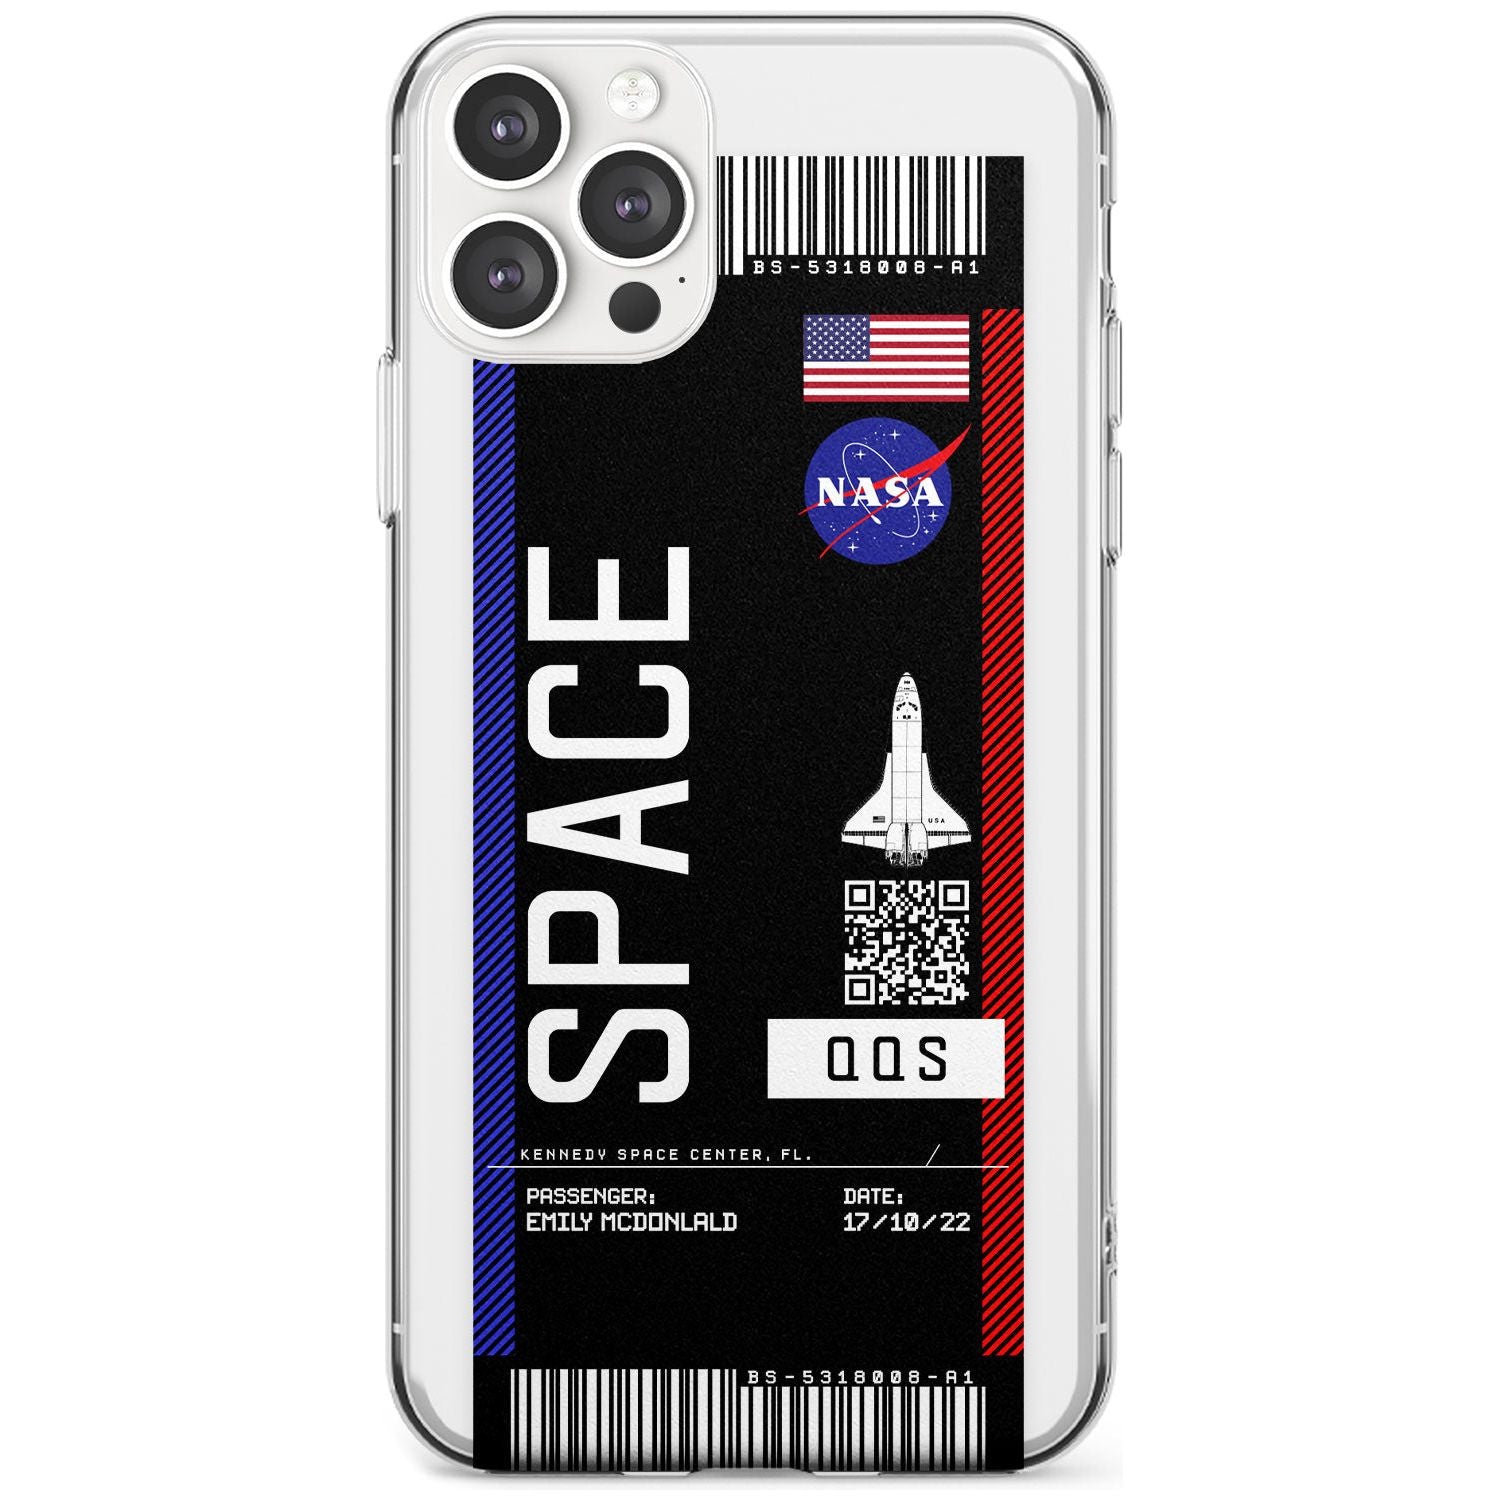 Personalised NASA Boarding Pass (Dark) Slim TPU Phone Case for iPhone 11 Pro Max